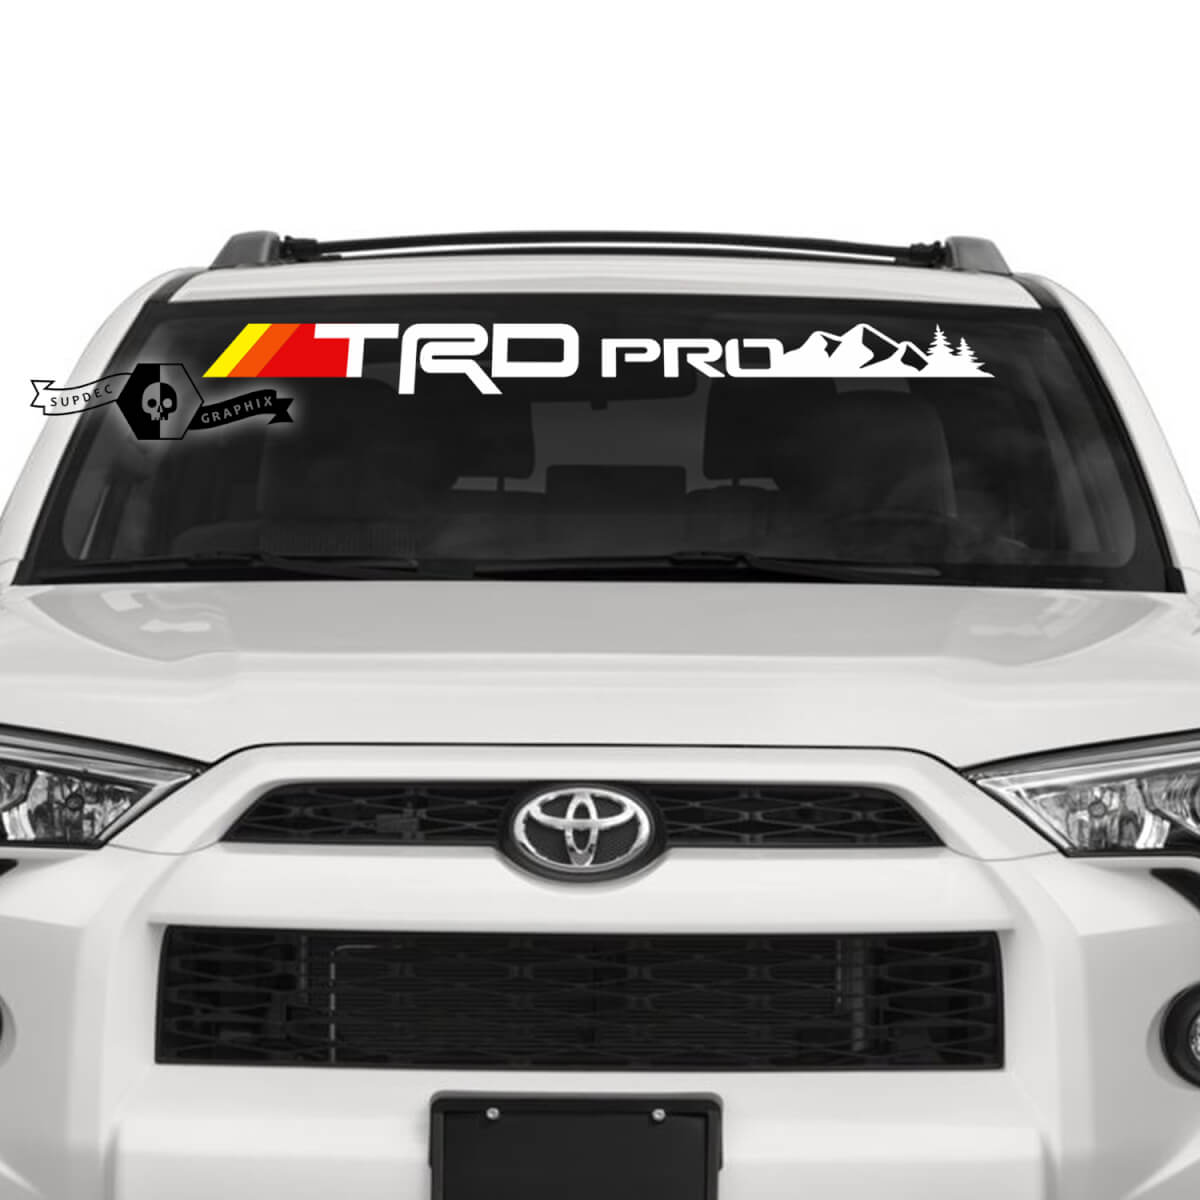 4Runner 2023 Windschutzscheibe Mountain SunSet Vinyl Logo Aufkleber Aufkleber für Toyota 4Runner TRD
